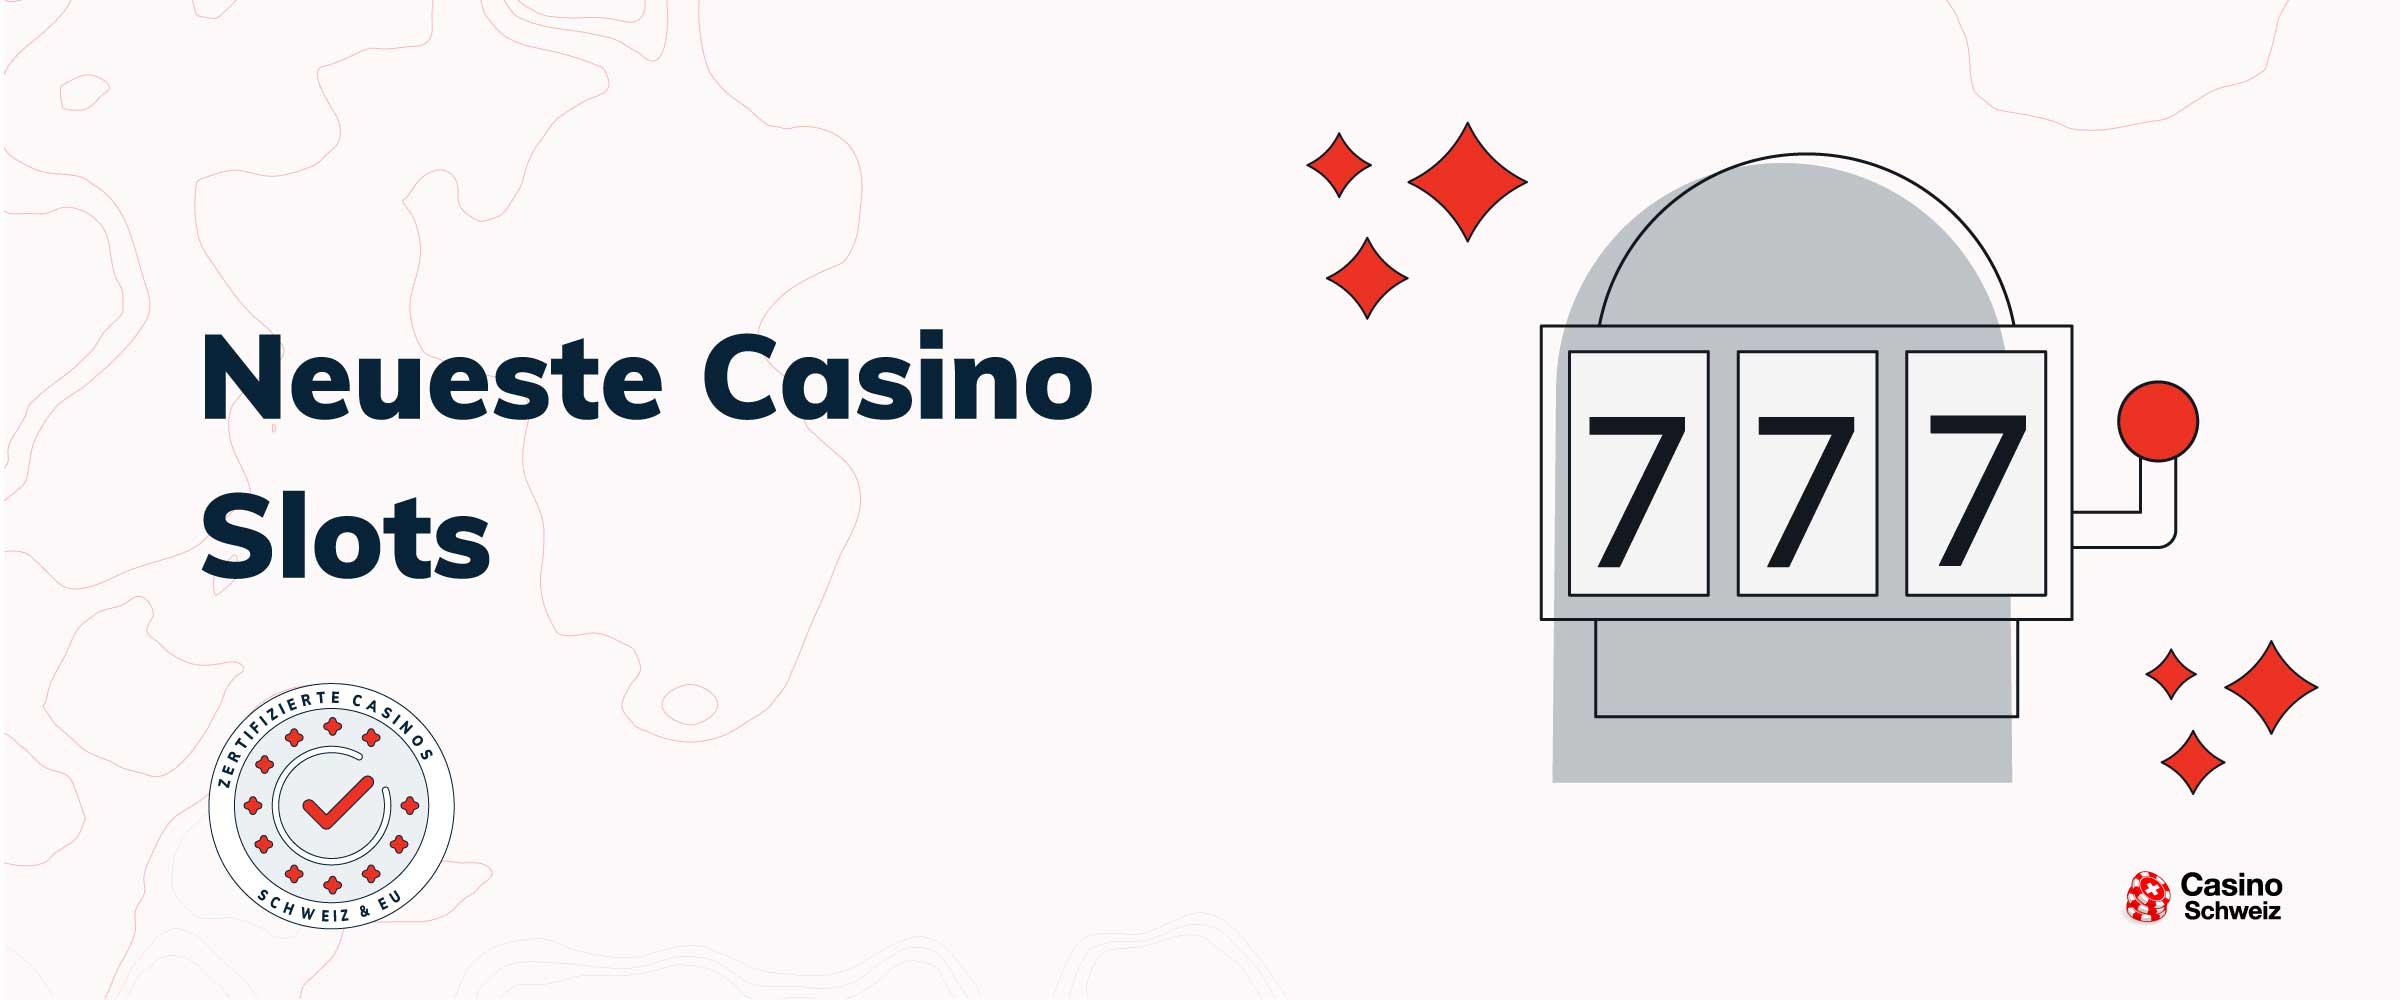 Neueste Casinos & Slots